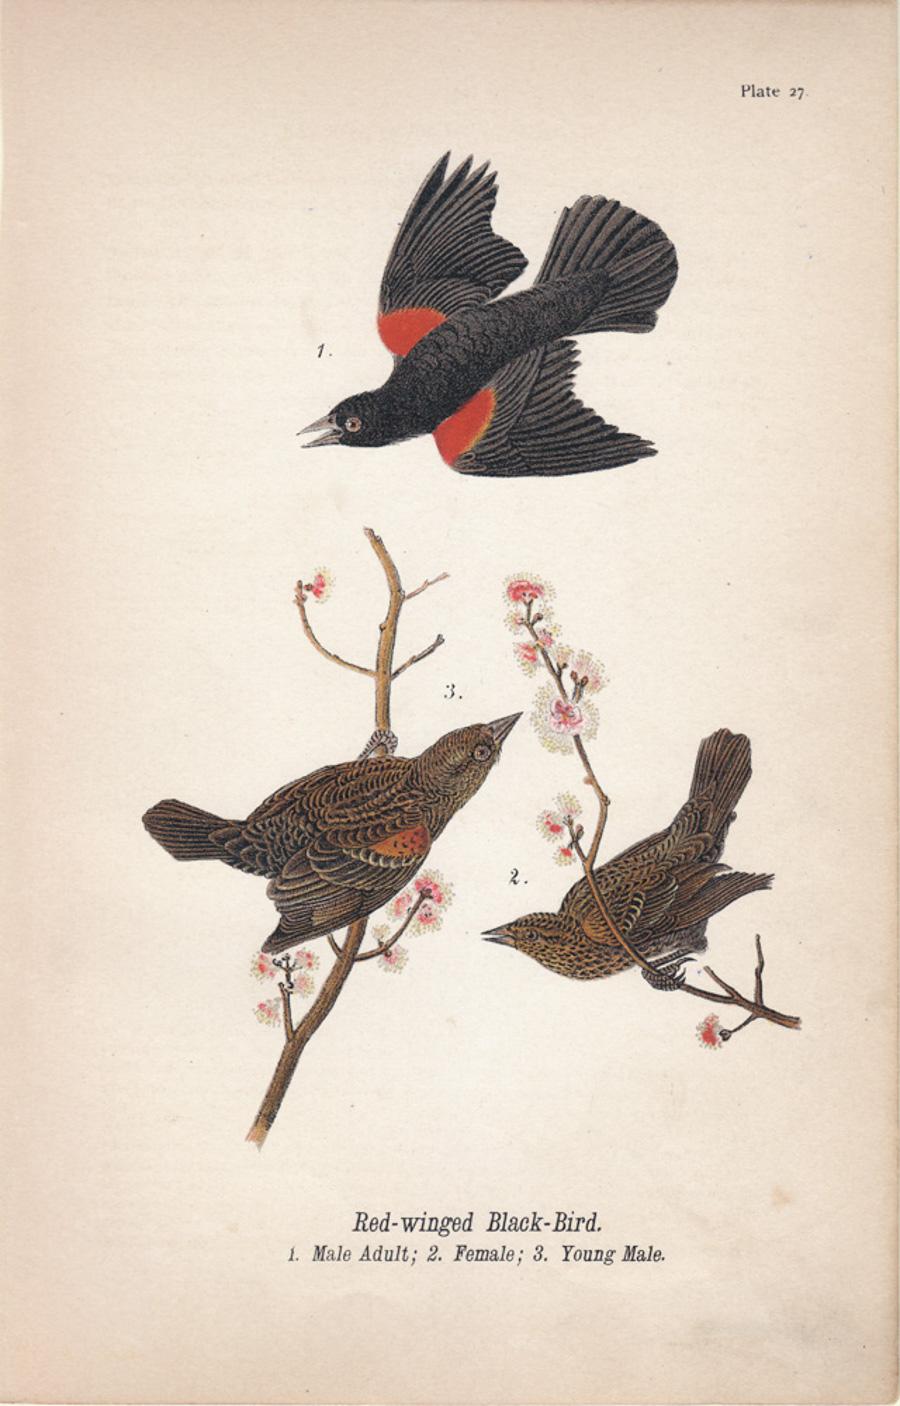 After John James Audubon Animal Print - Red-winged Black-Bird; Plate 27